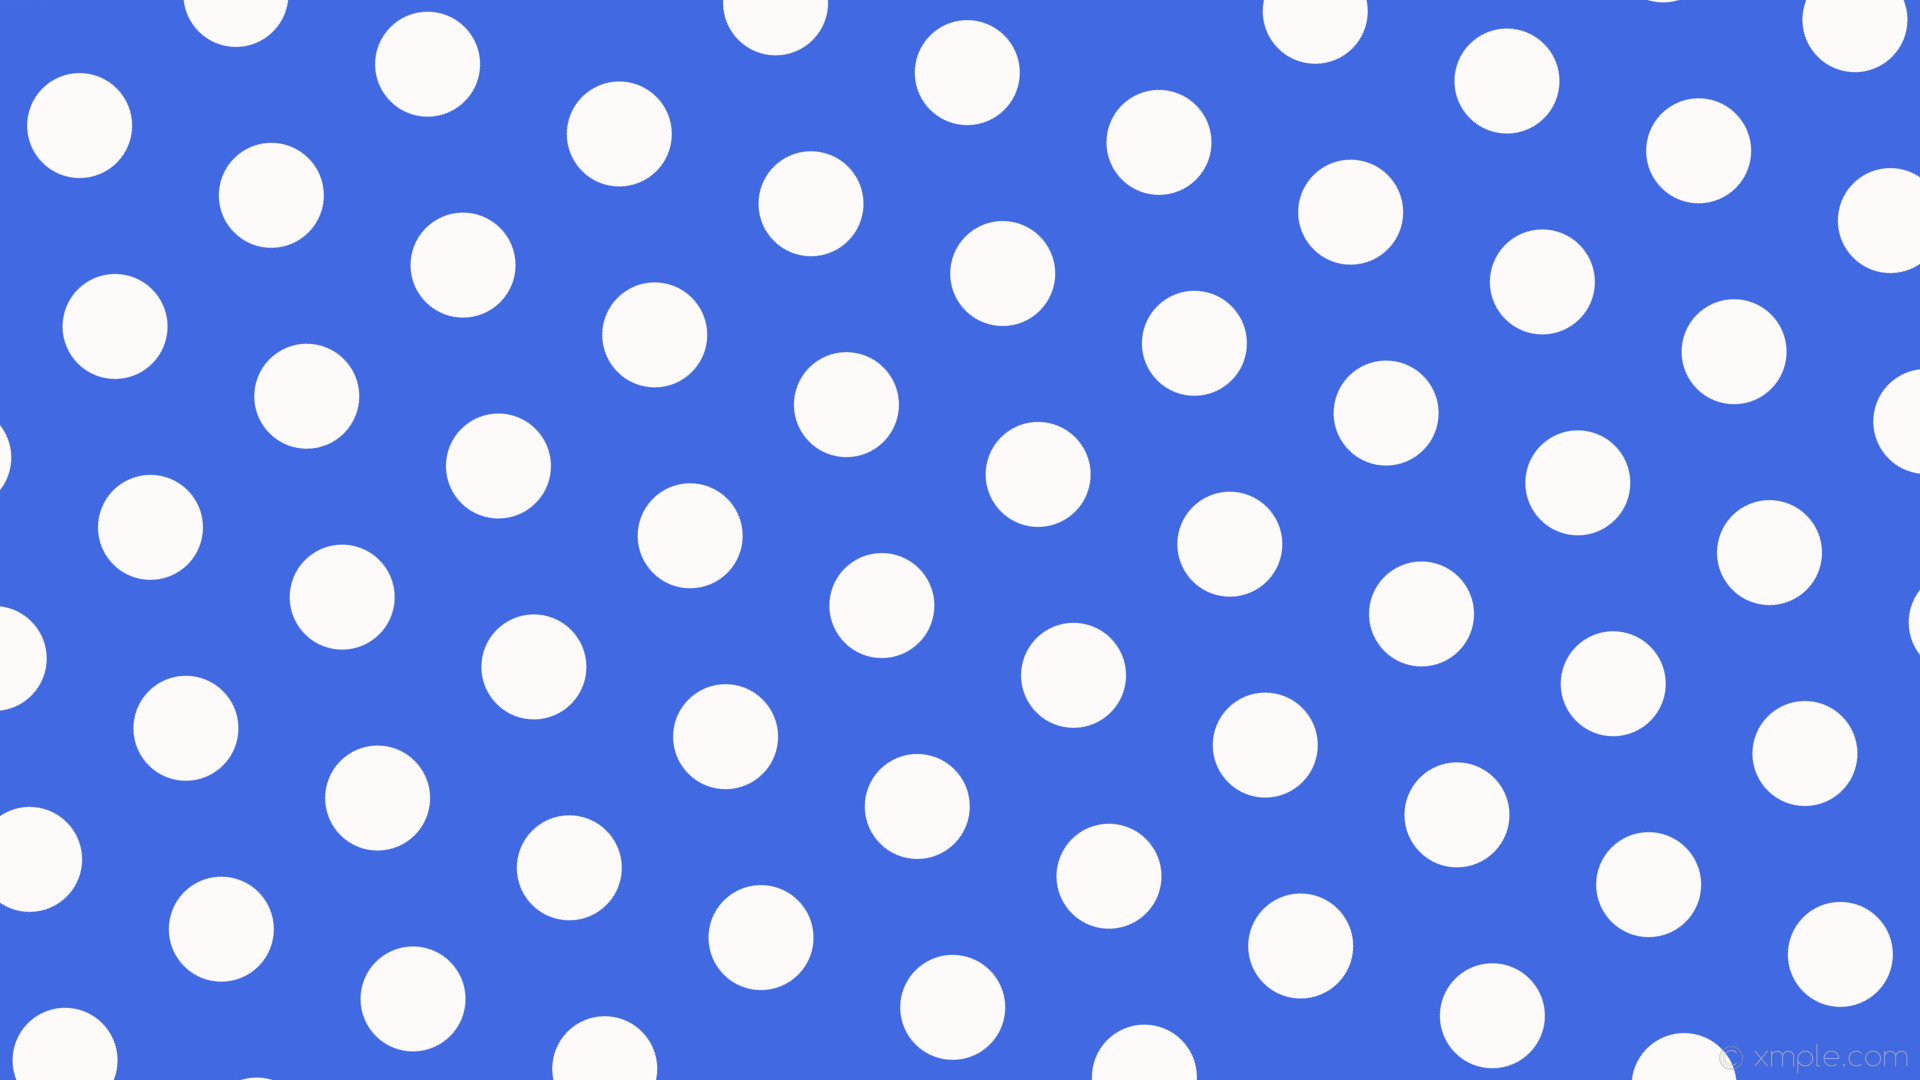 Polka Dot, Blue color palette, Relaxing and serene, Cool vibes, 1920x1080 Full HD Desktop